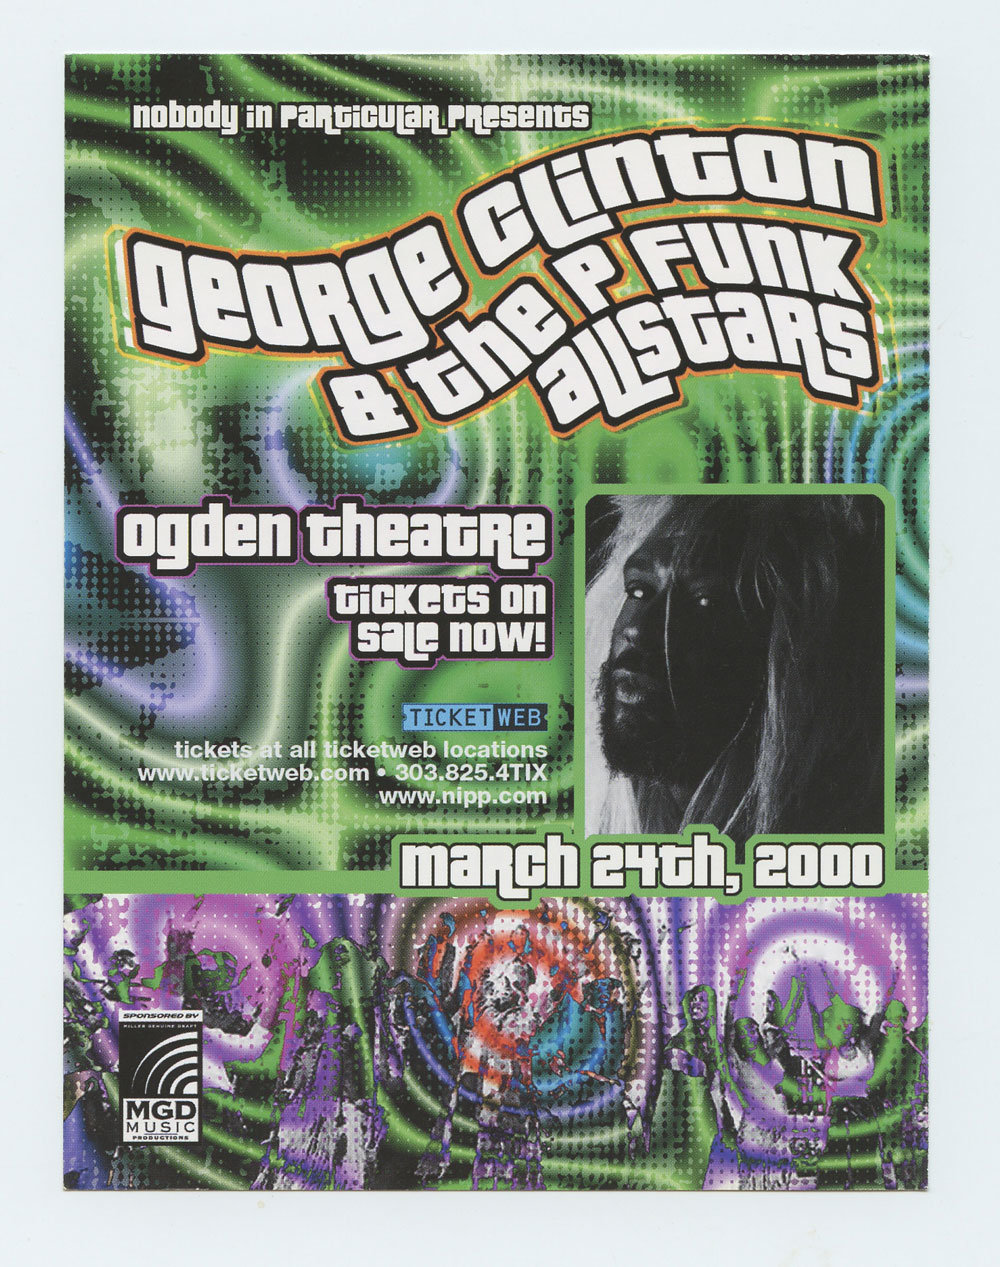 George Clinton Handbill 2000 Mar 24 Ogden Theatre Denver